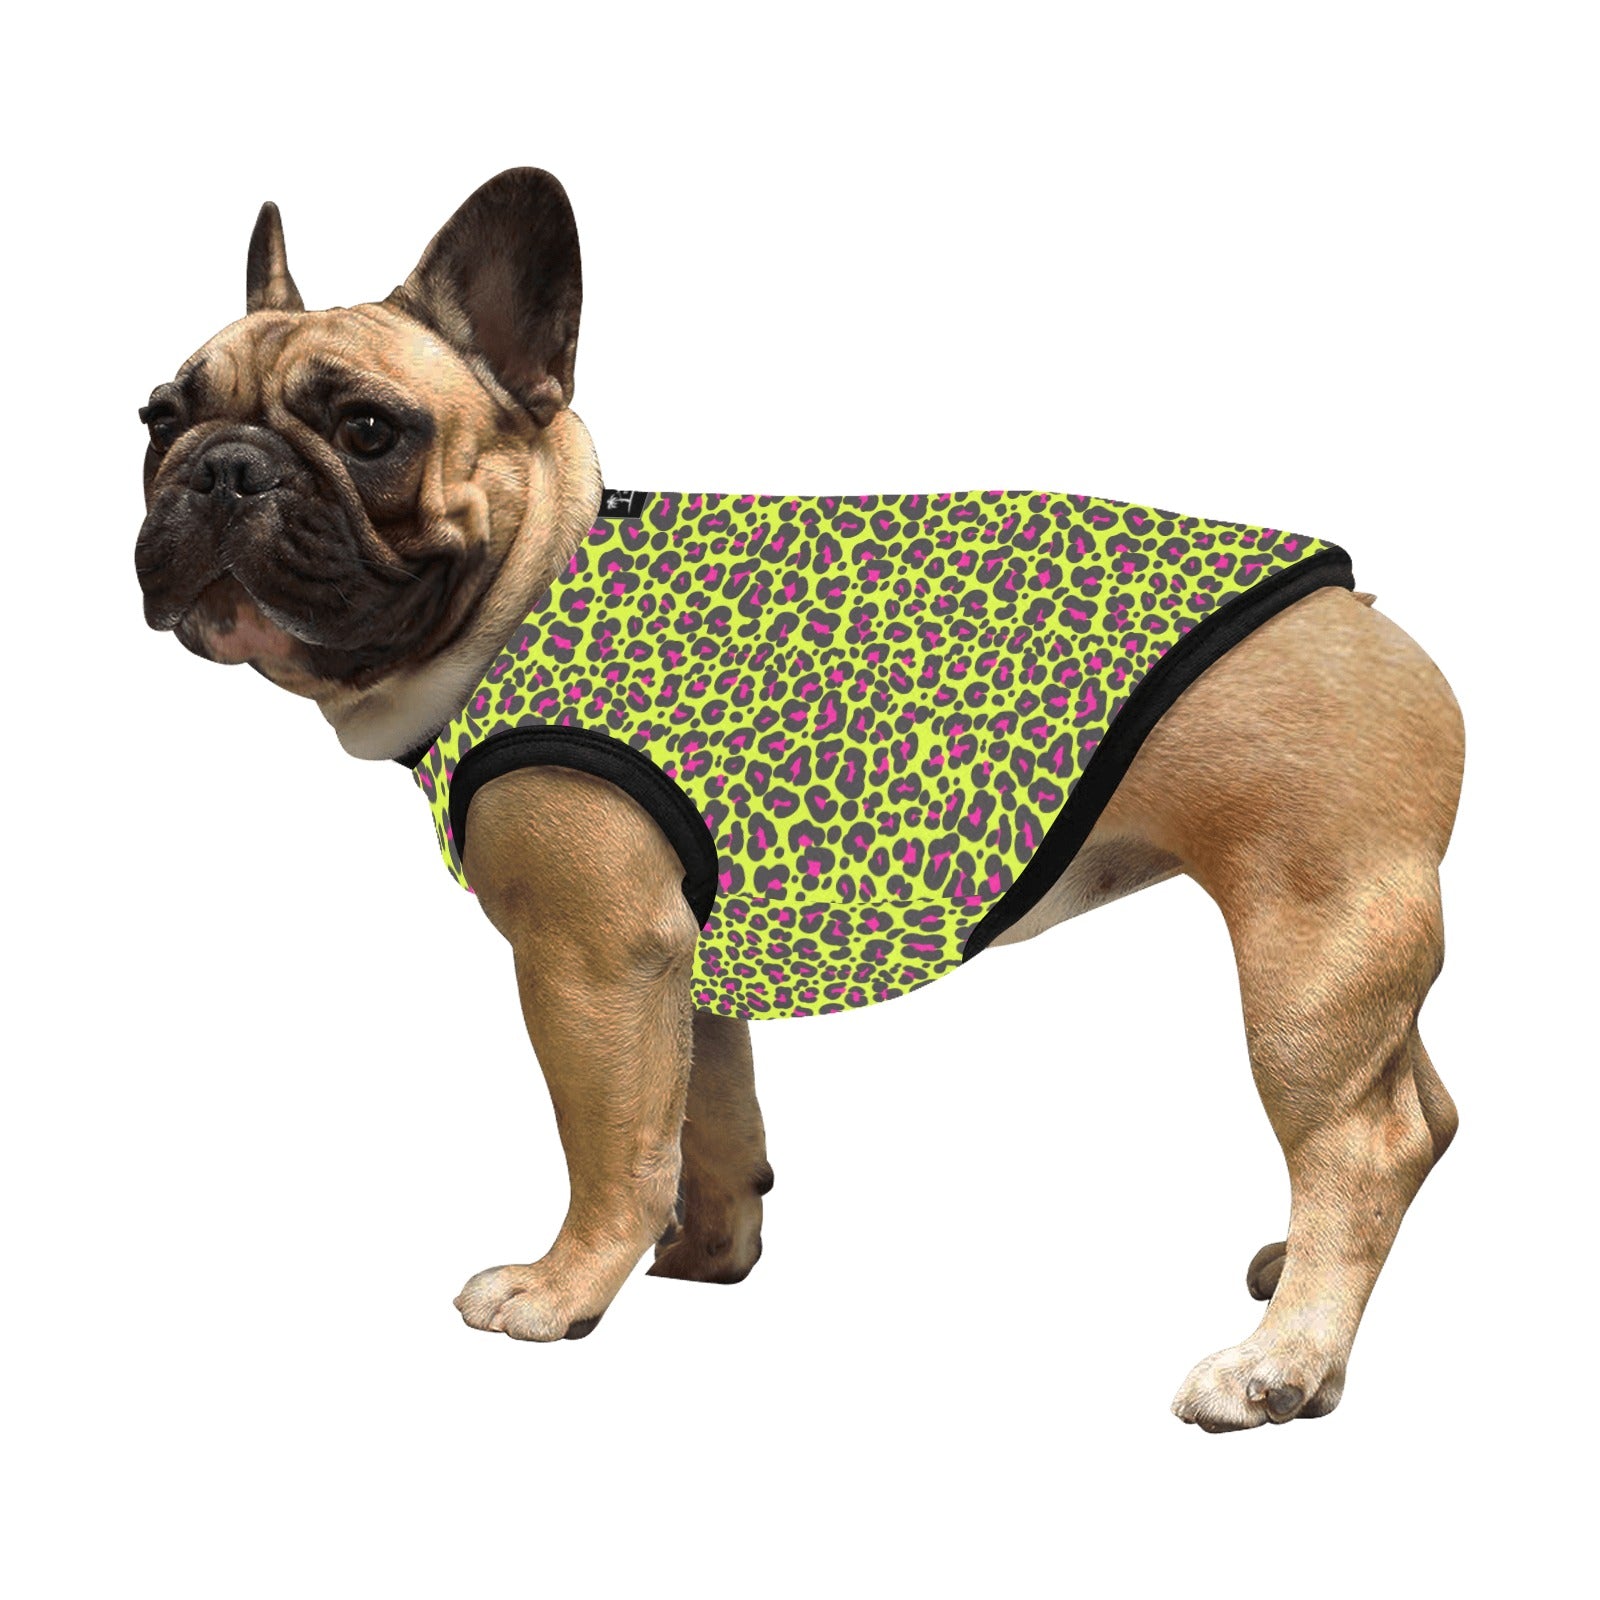 Camiseta sin mangas ligera para mascotas con estampado integral - Leopardo de neón